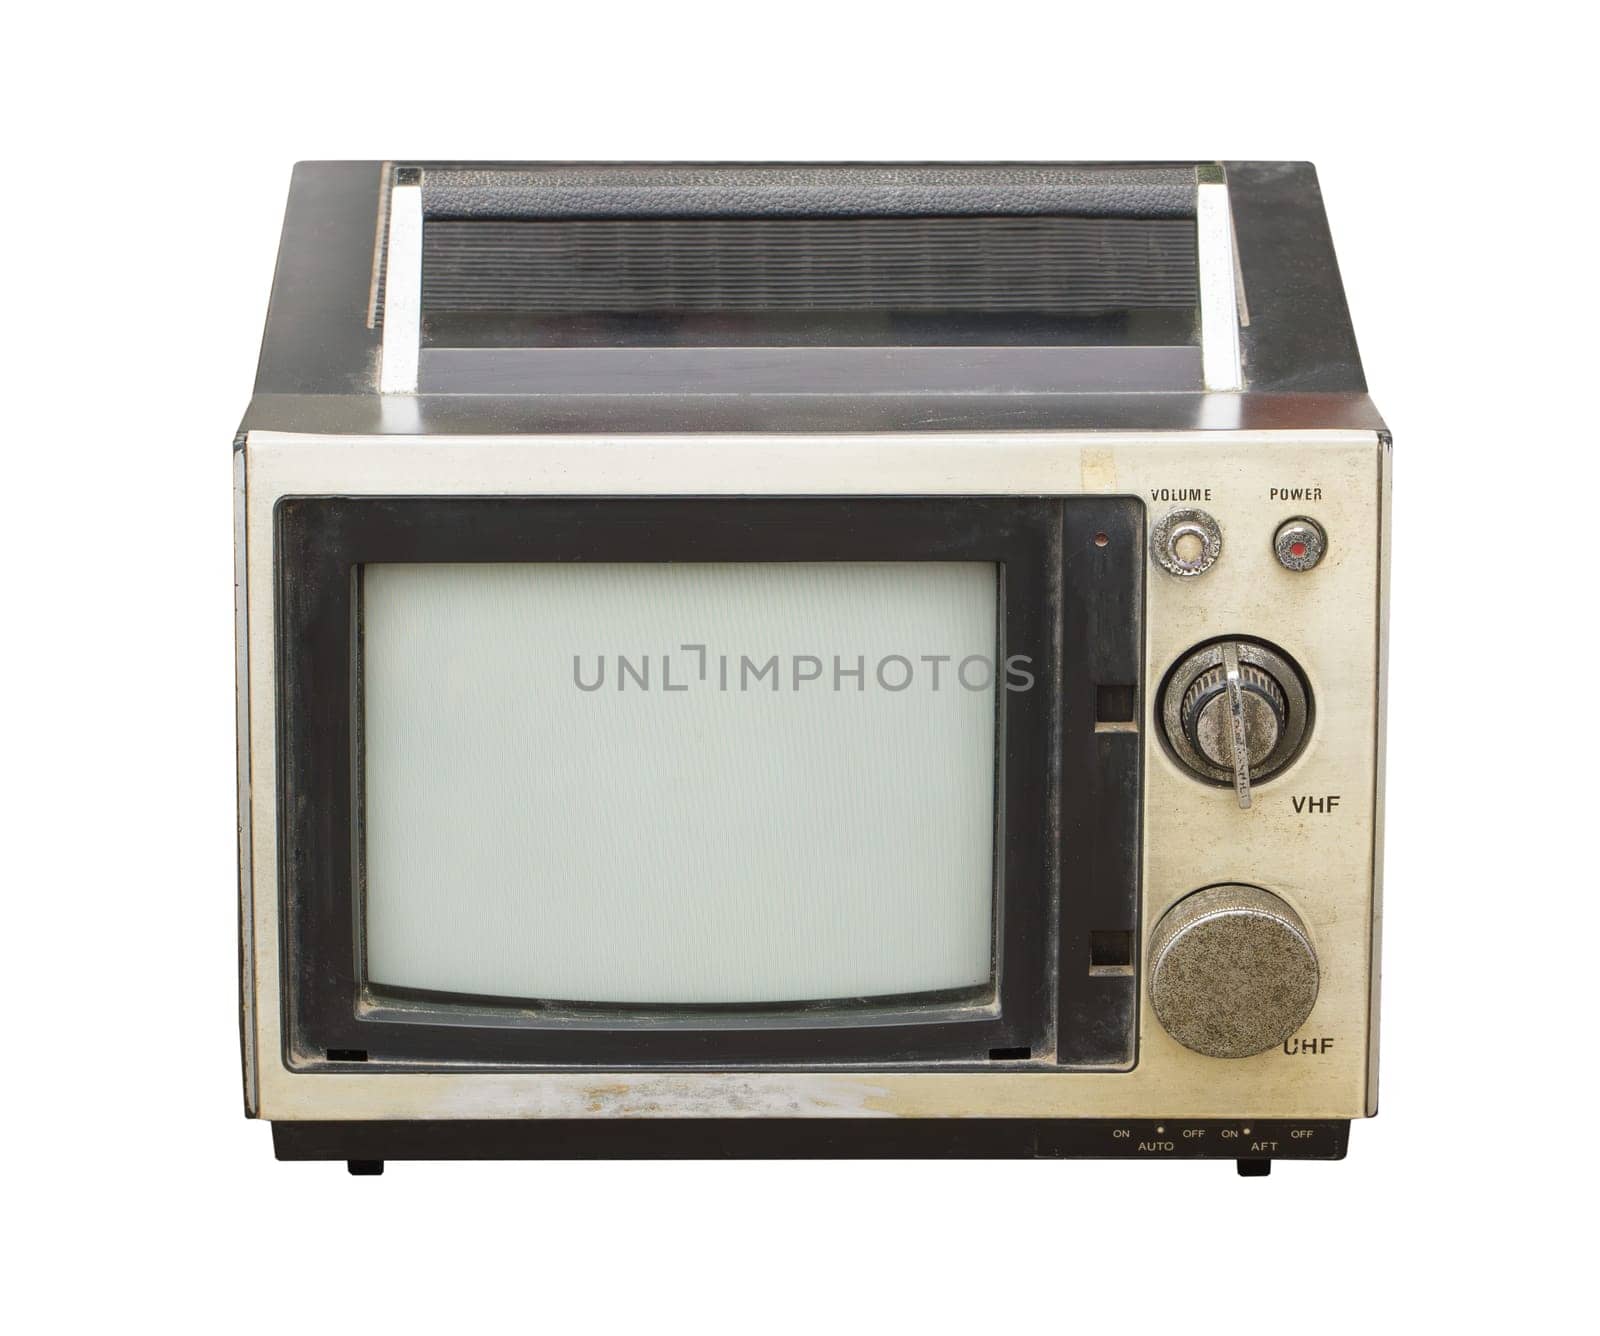 Retro Vintage television isolated on white background